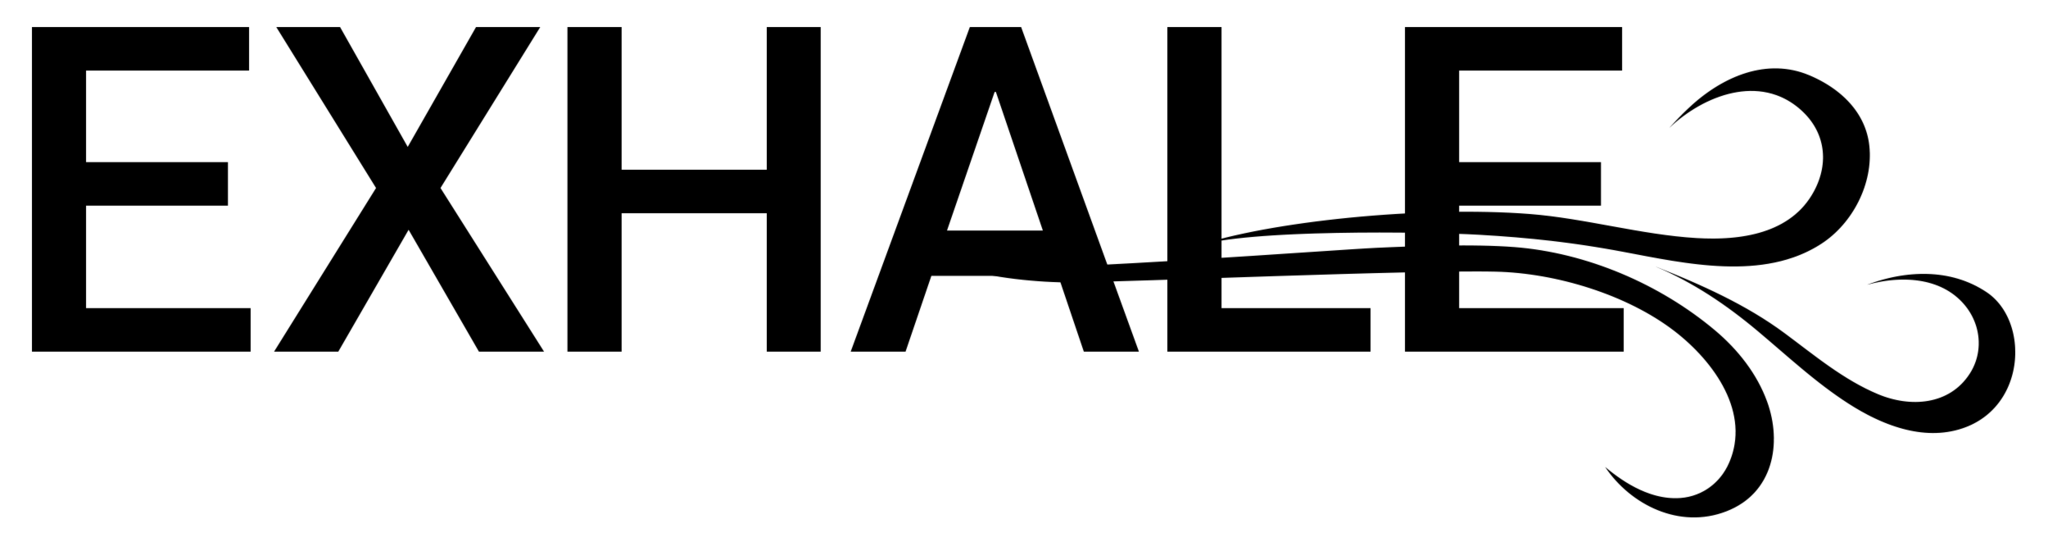 EXHALE logo in black